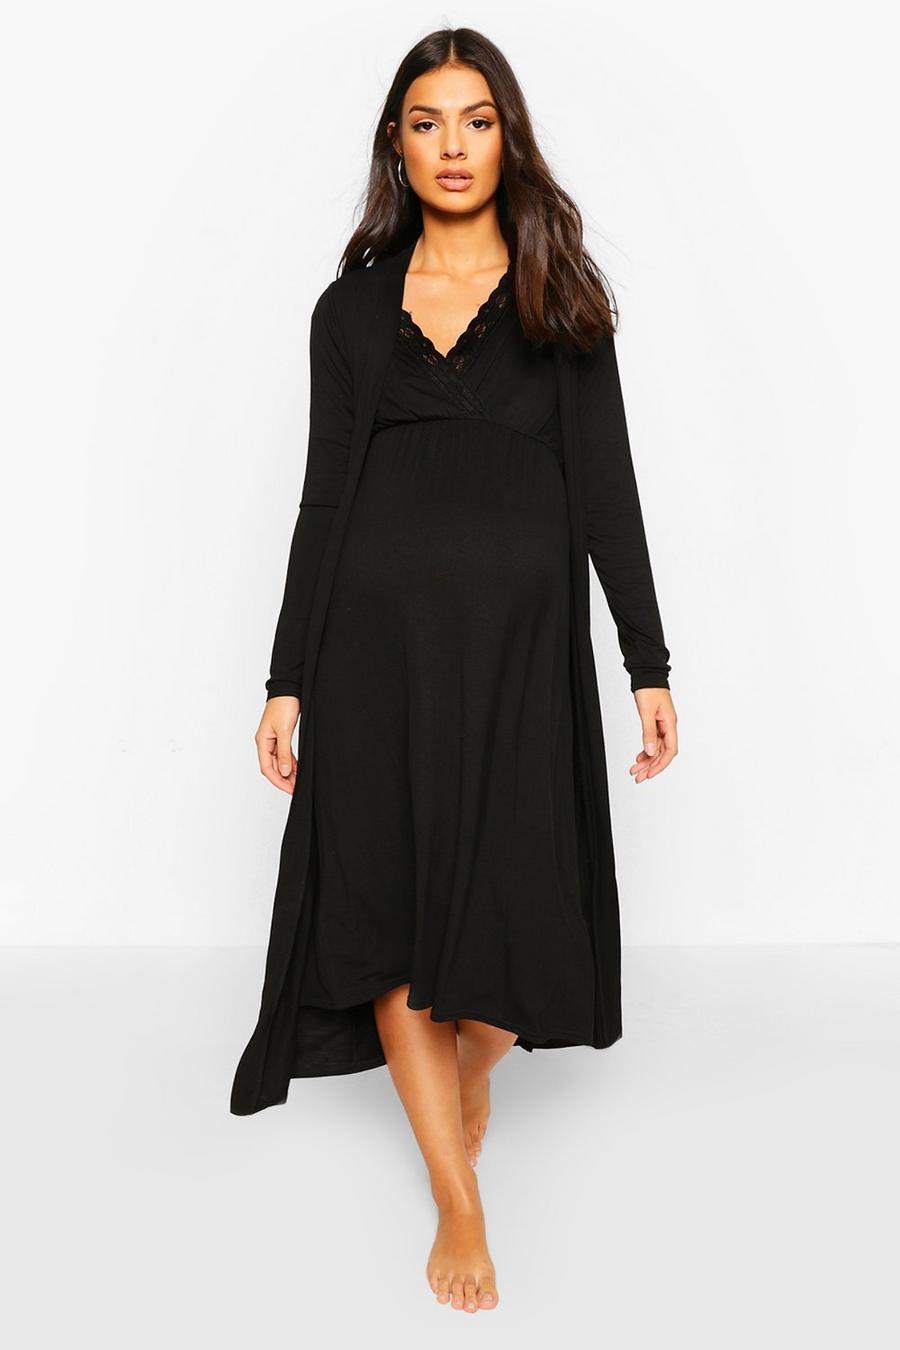 US Women Maternity Nursing Nightgown Cotton Long Night-Robe Sleepwear Robe S-XL 